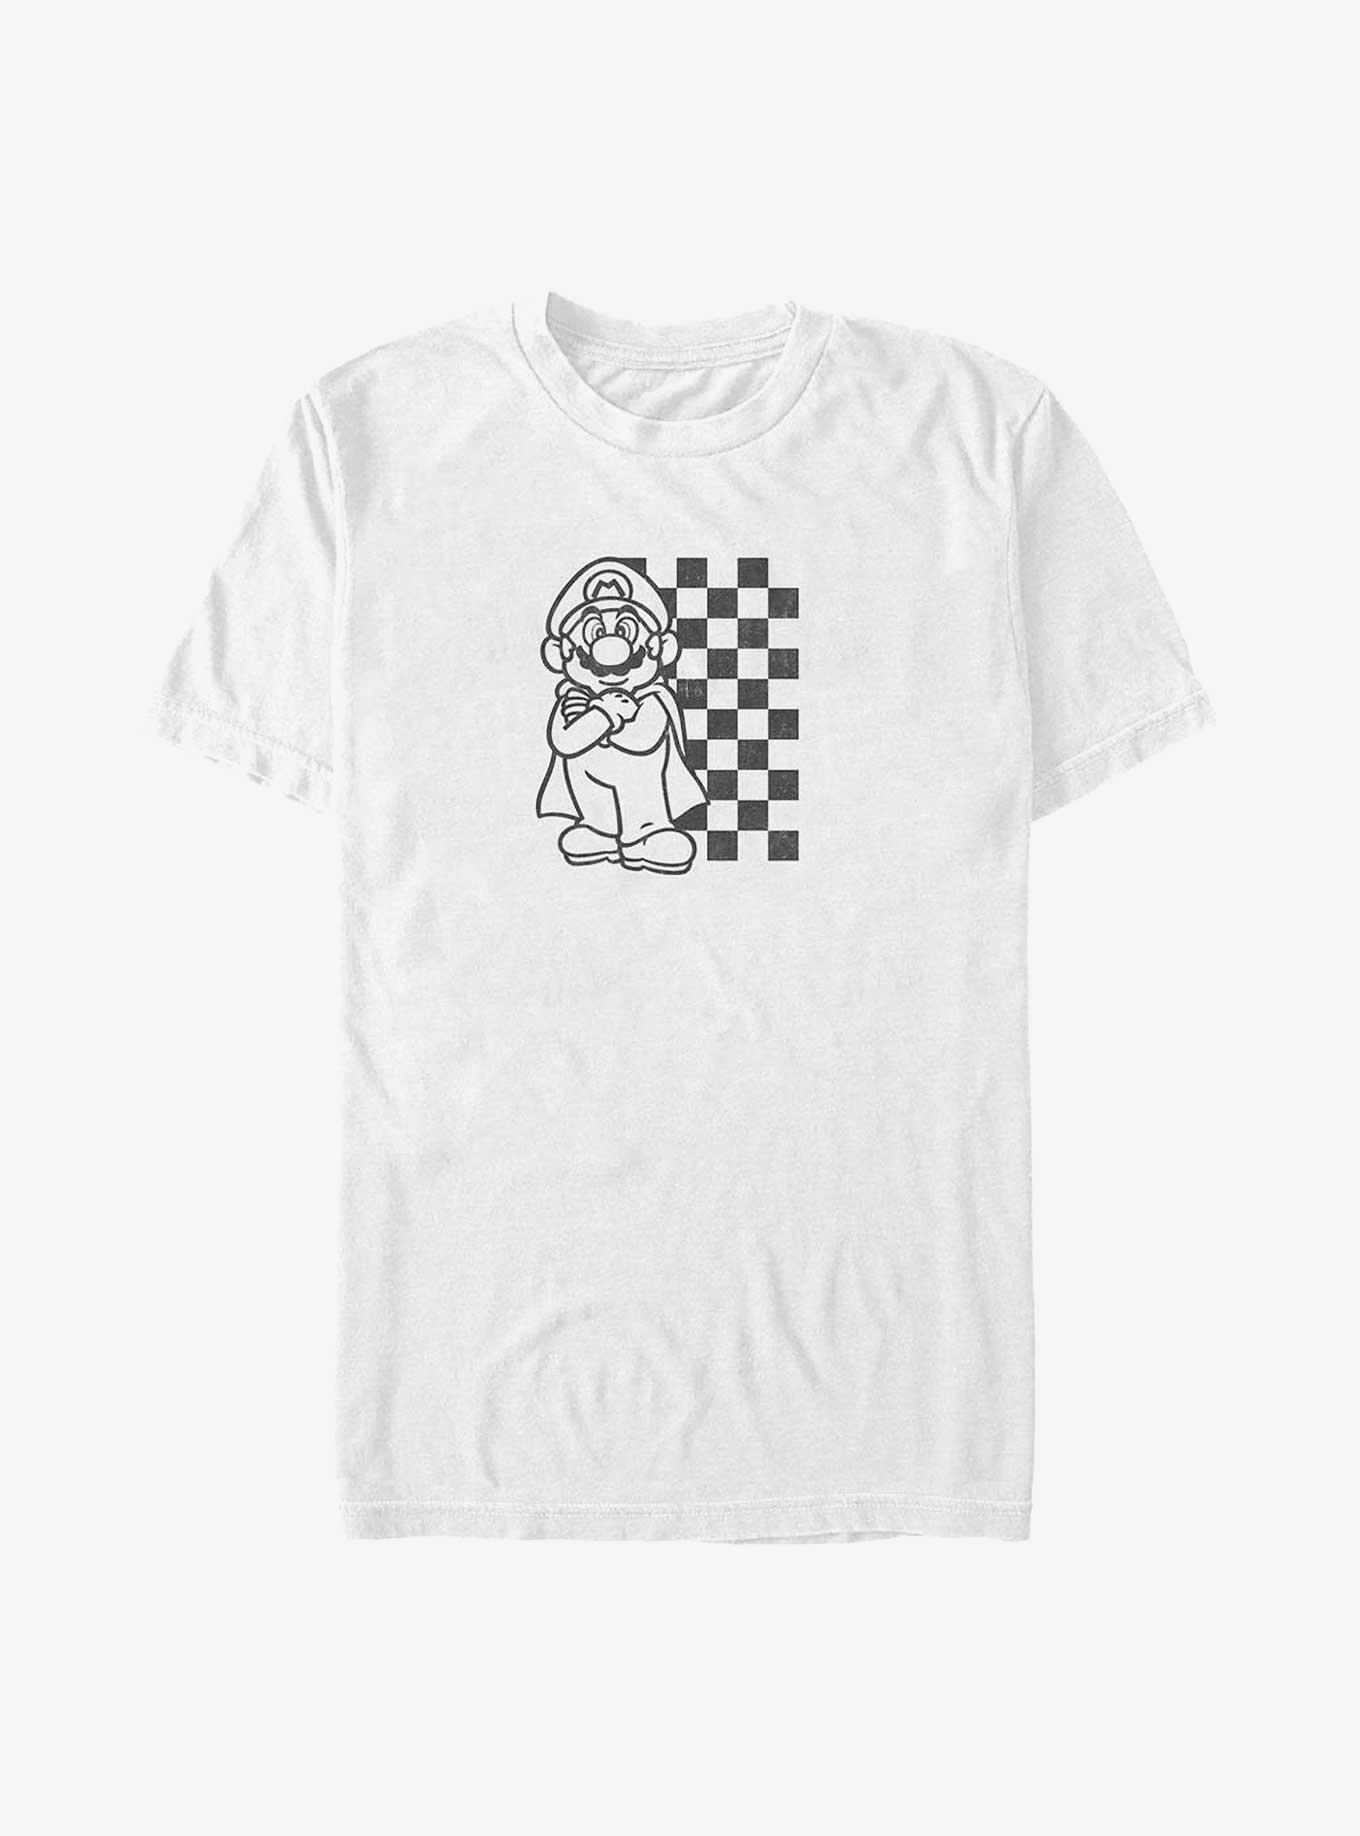 Nintendo Mario Checkered T-Shirt